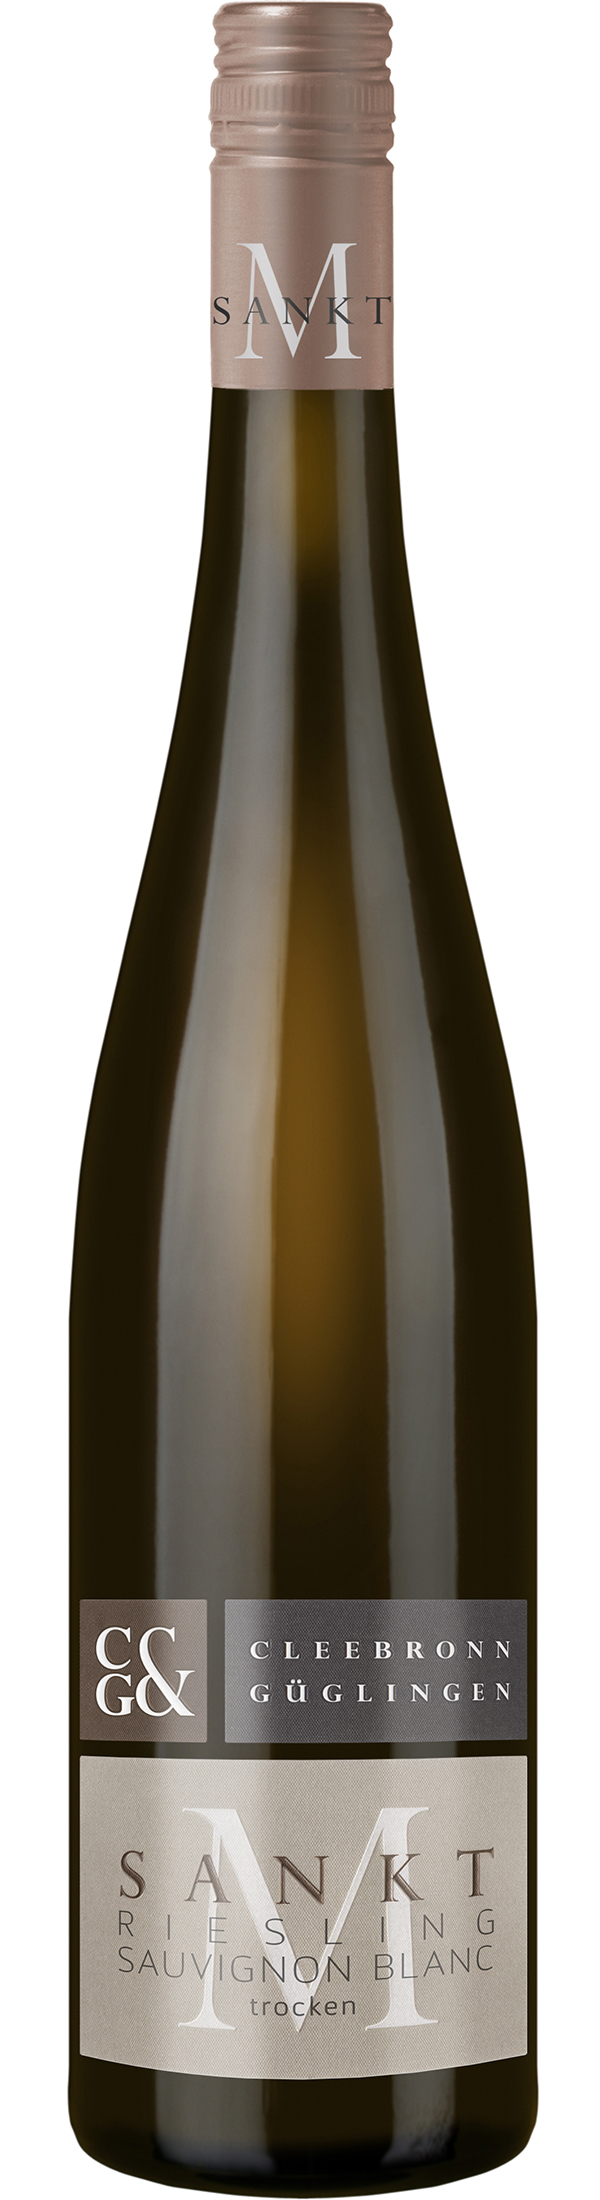 Cleebronn Sankt M Riesling mit Sauvignon Blanc trocken 0,75 l